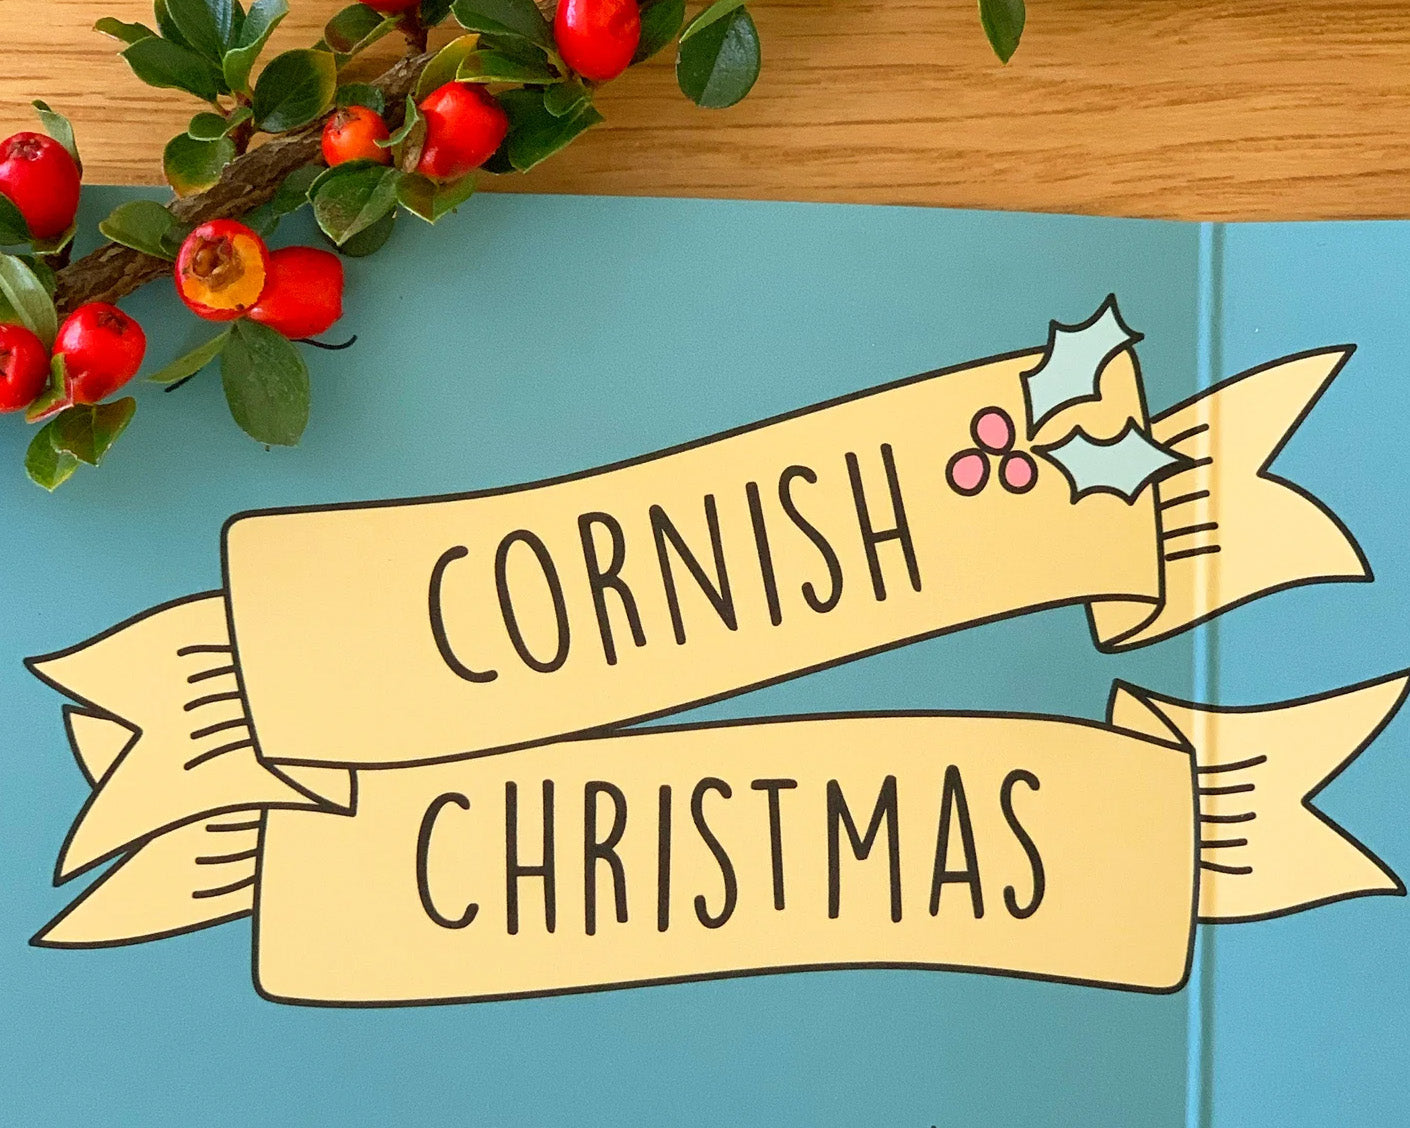 Cornwall Christmas board game detail